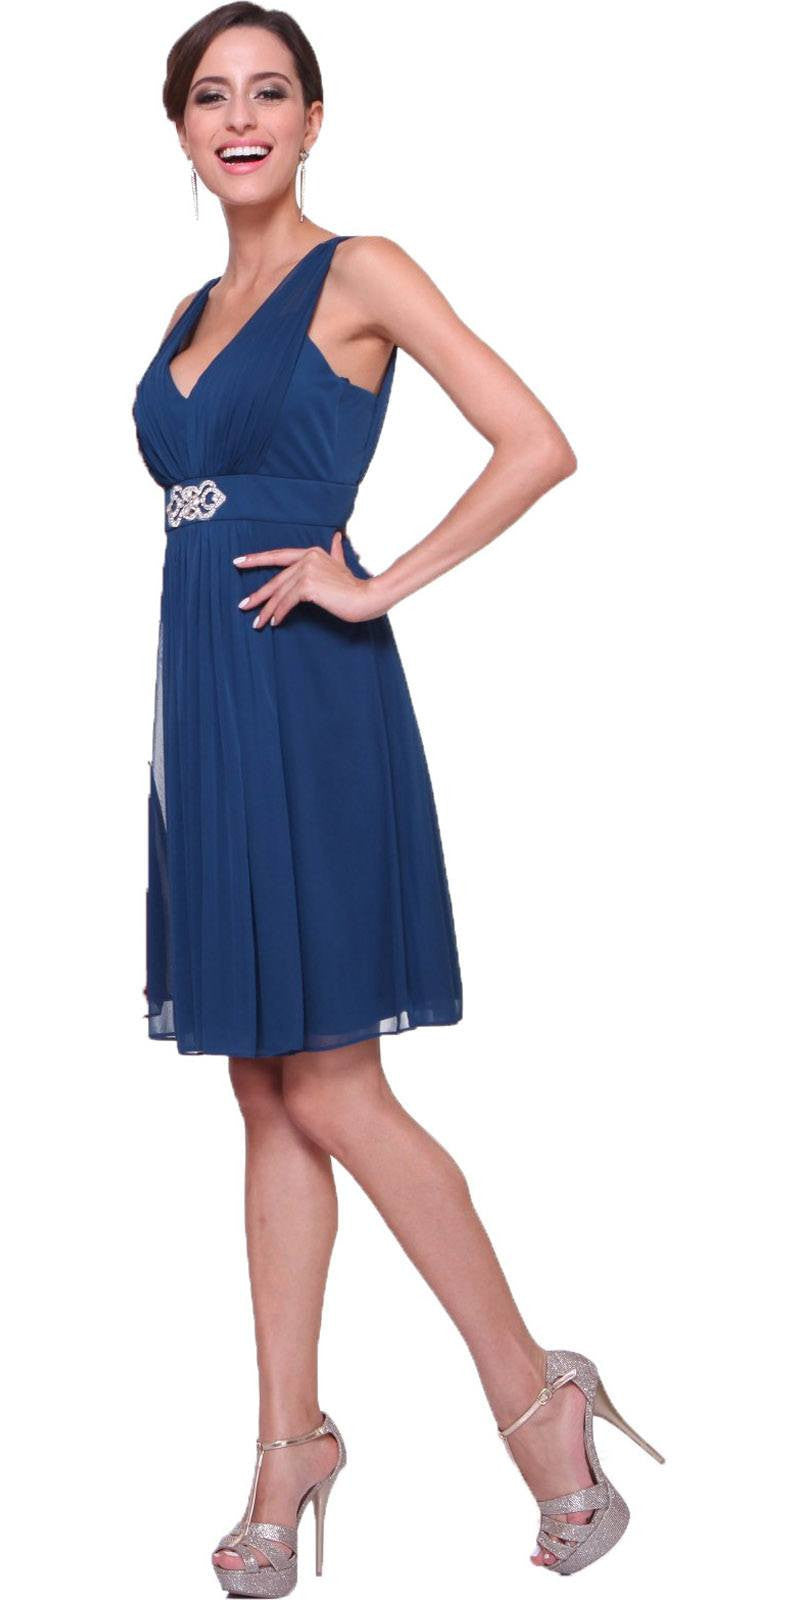 Cinderella Divine 3915 Chiffon Bridesmaid Royal Blue Dress Knee Length Empire Waist